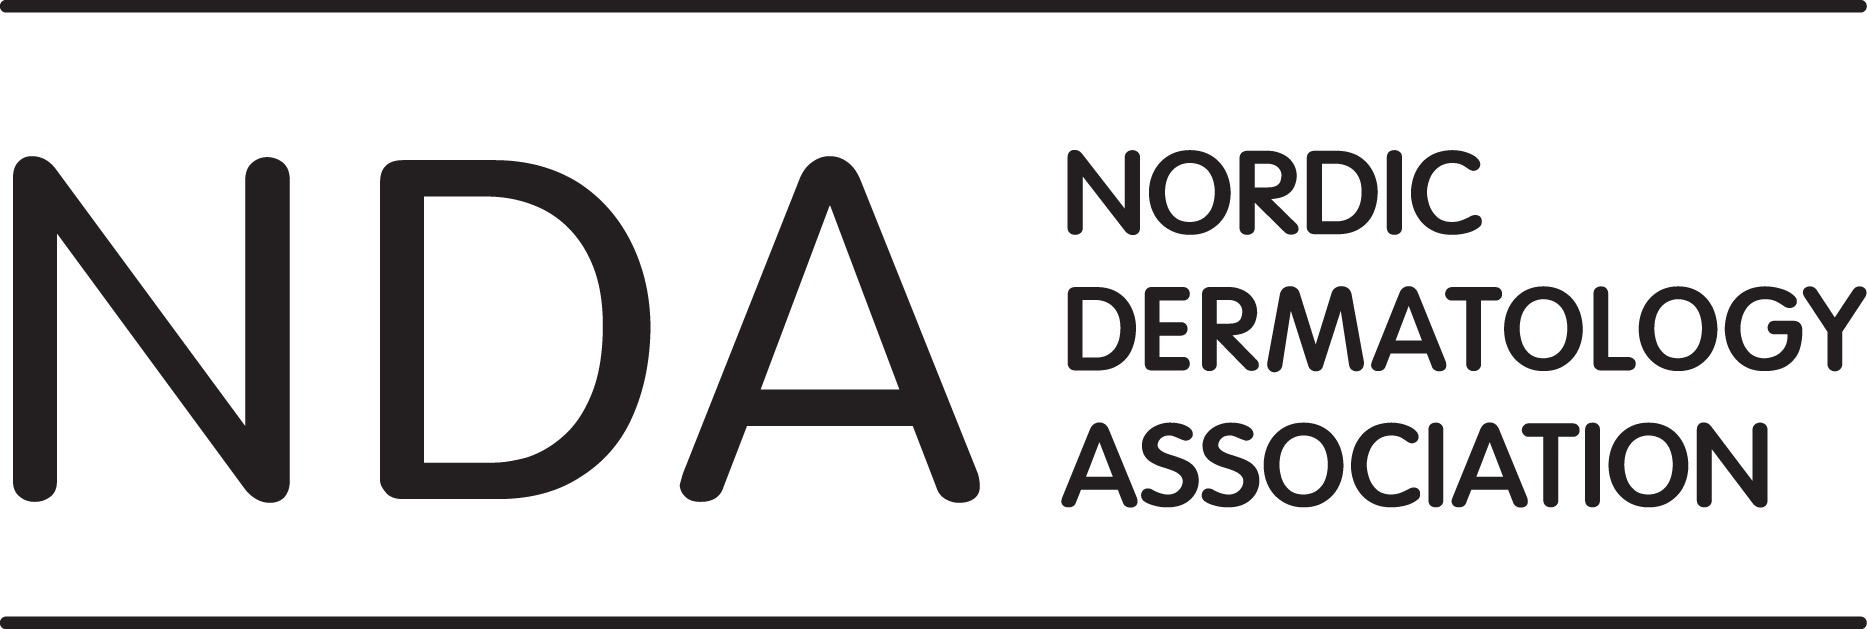 NCDV 2022 - 35th Nordic Congress of Dermatology & Venereology